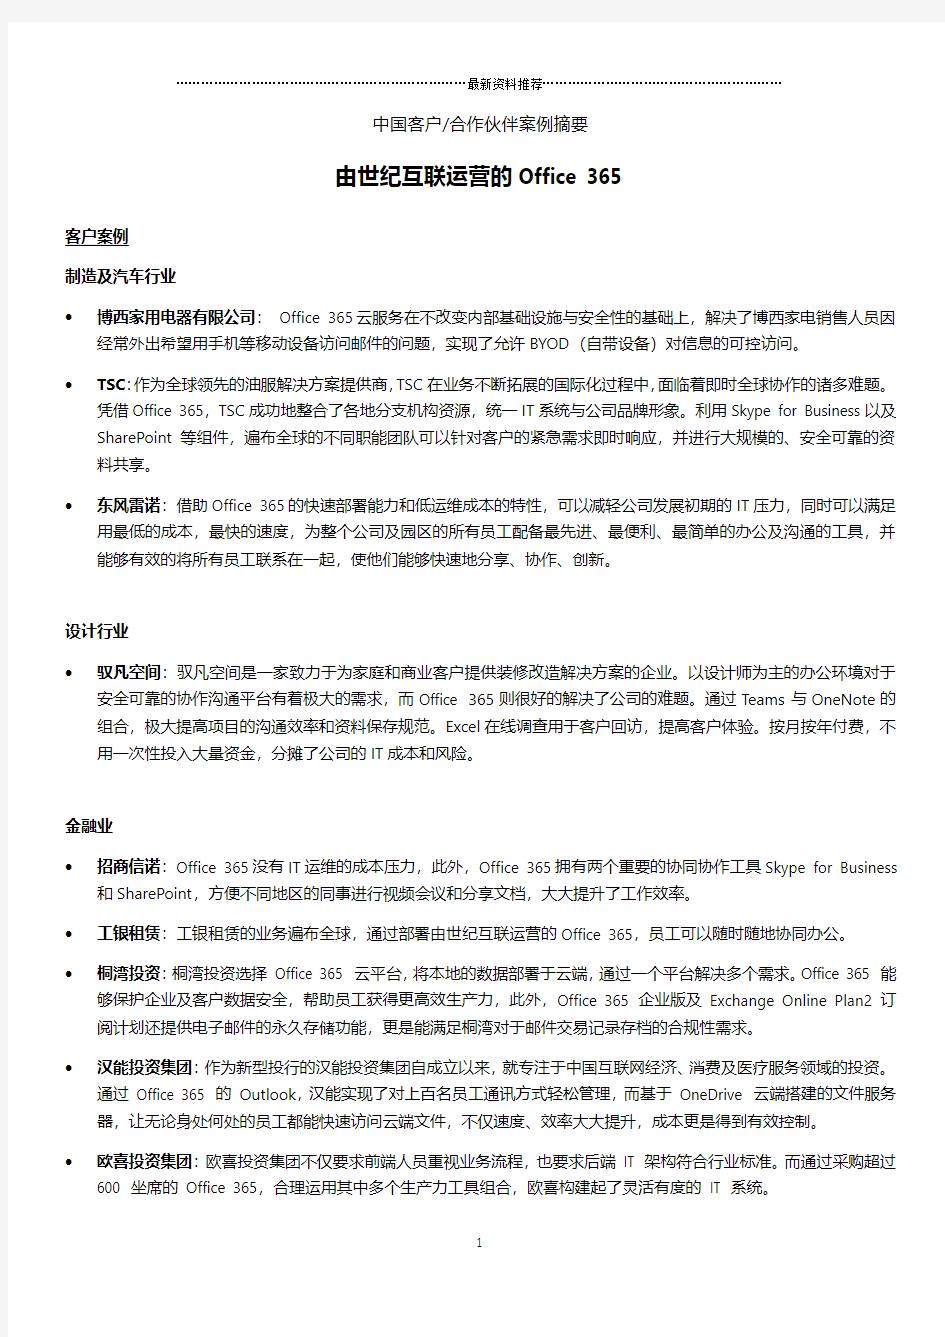 Office 365中国客户案例摘要(更新于4月)精编版